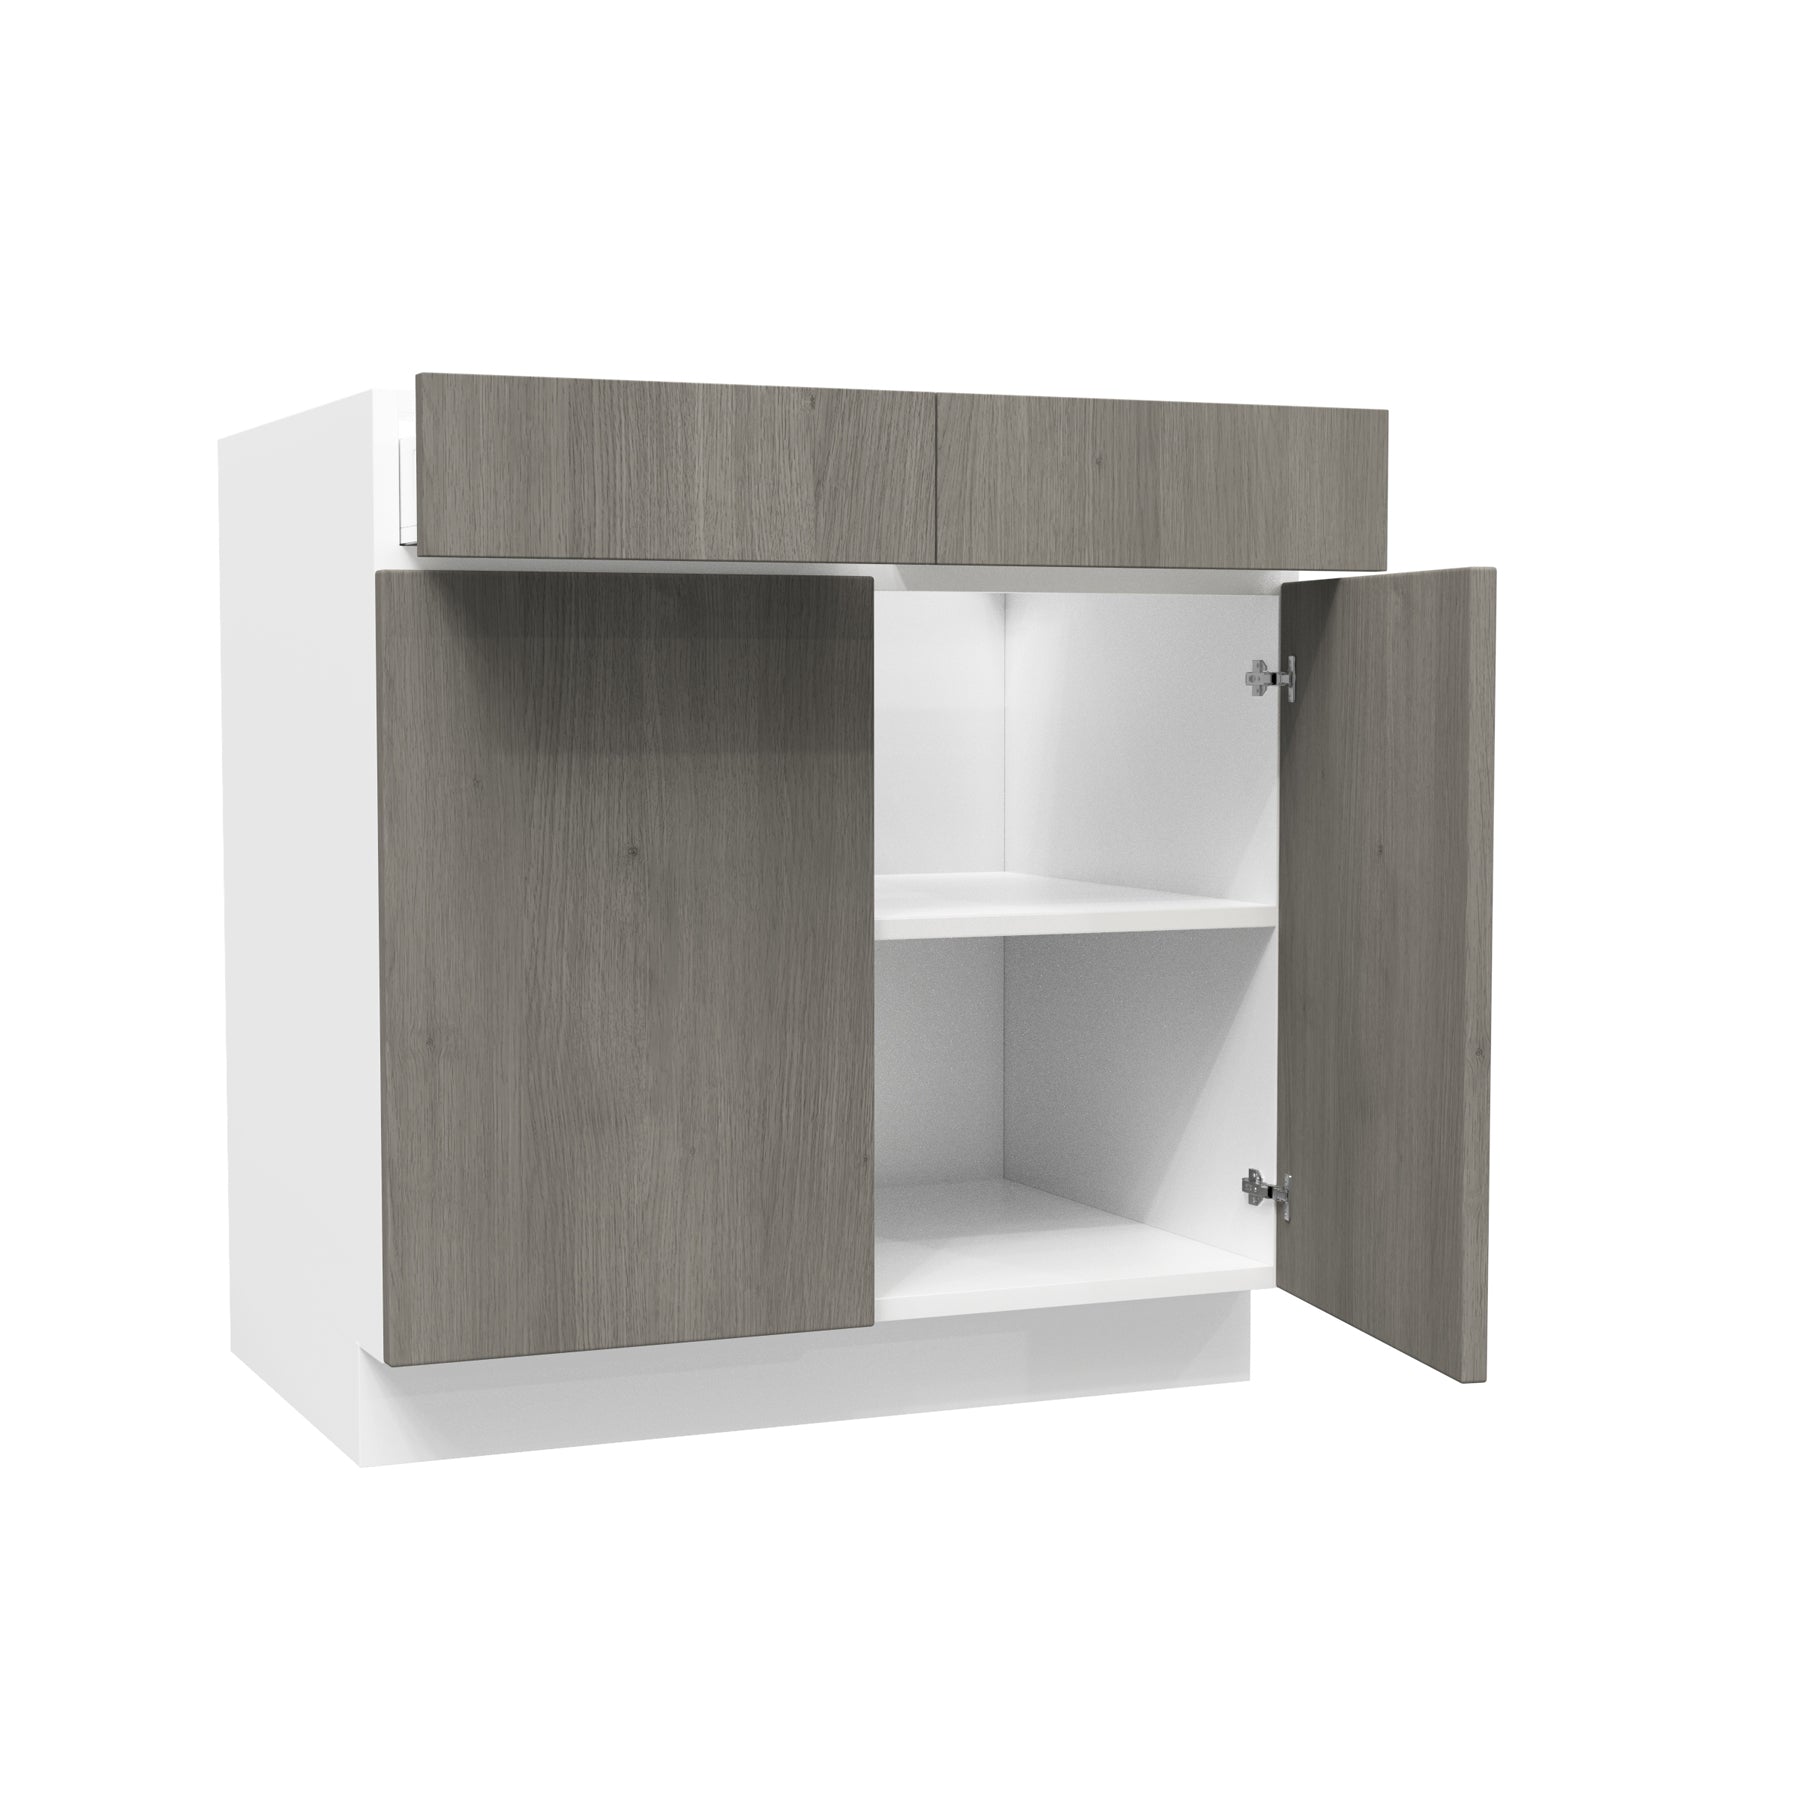 2 Door Base Cabinet| Matrix Silver | 33W x 34.5H x 24D